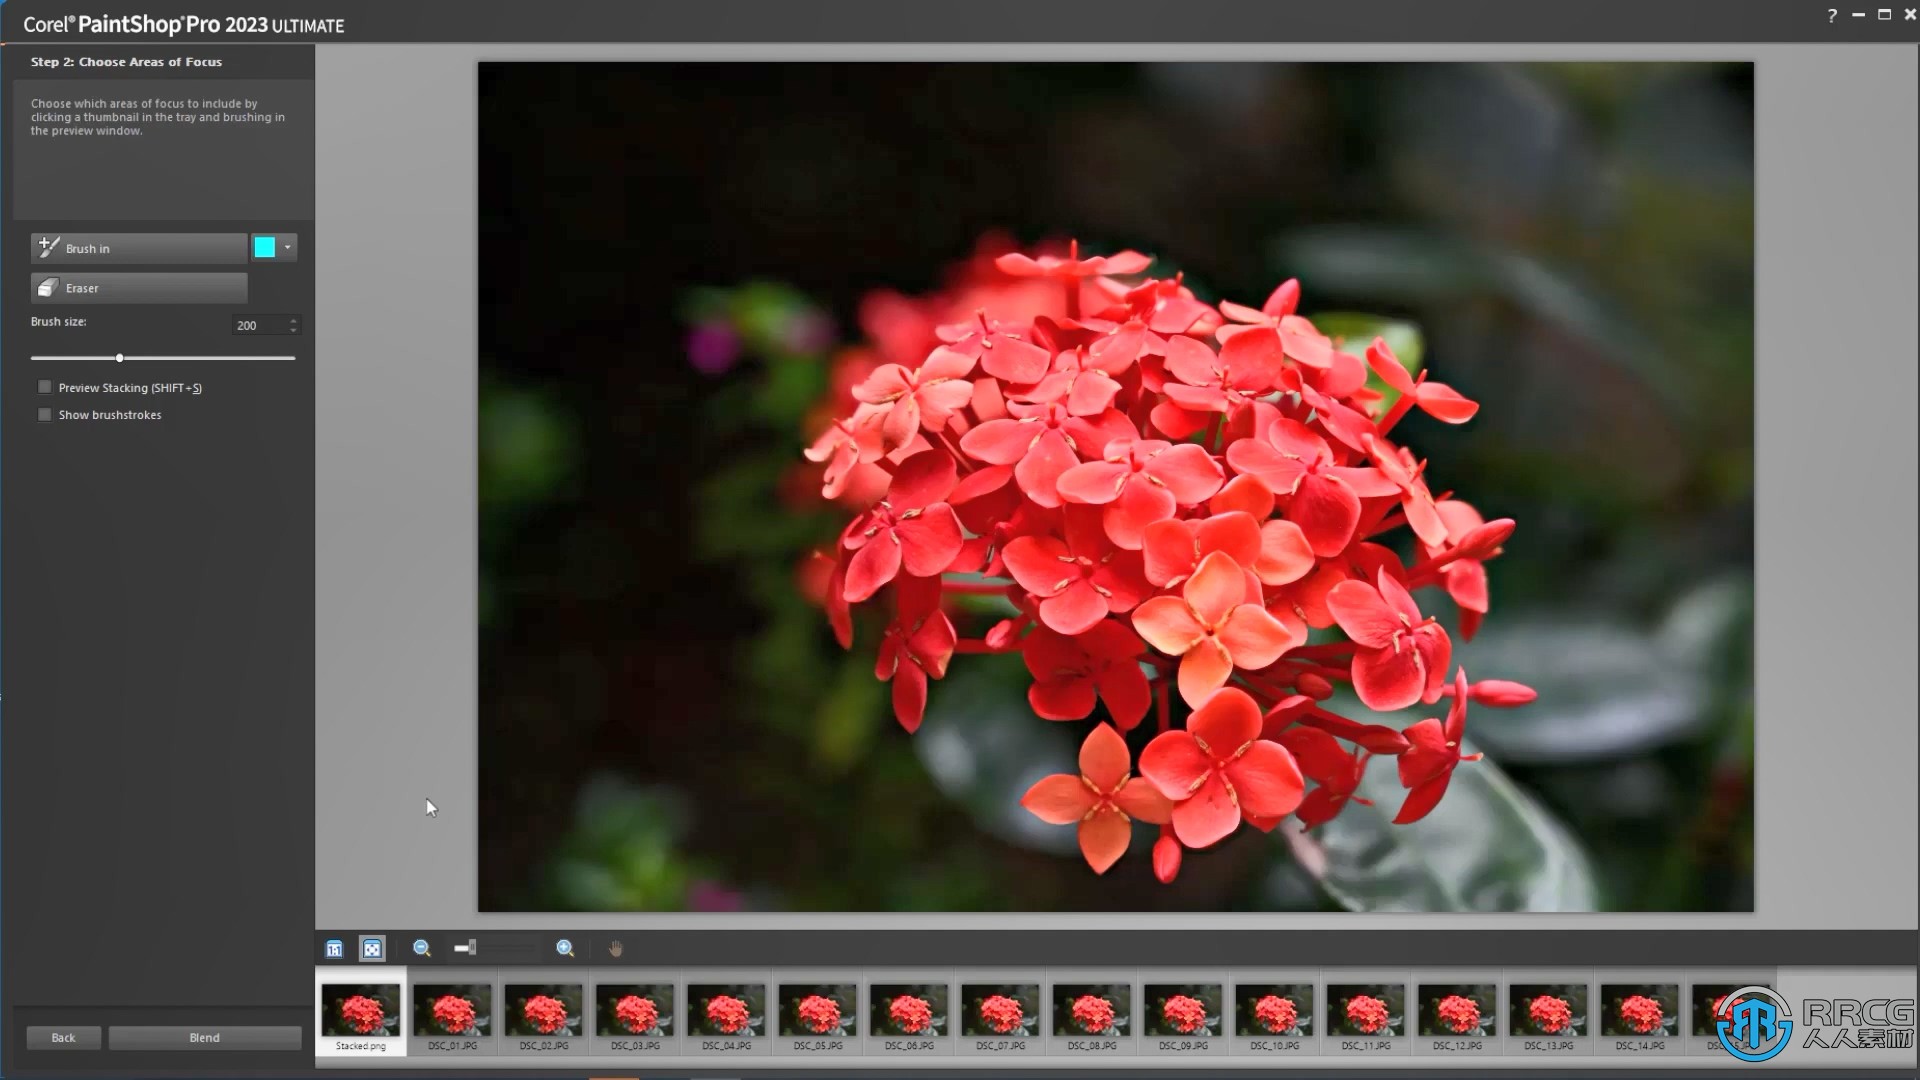 PaintShop Pro 2023专业相片编辑软件V25.1.0.28版